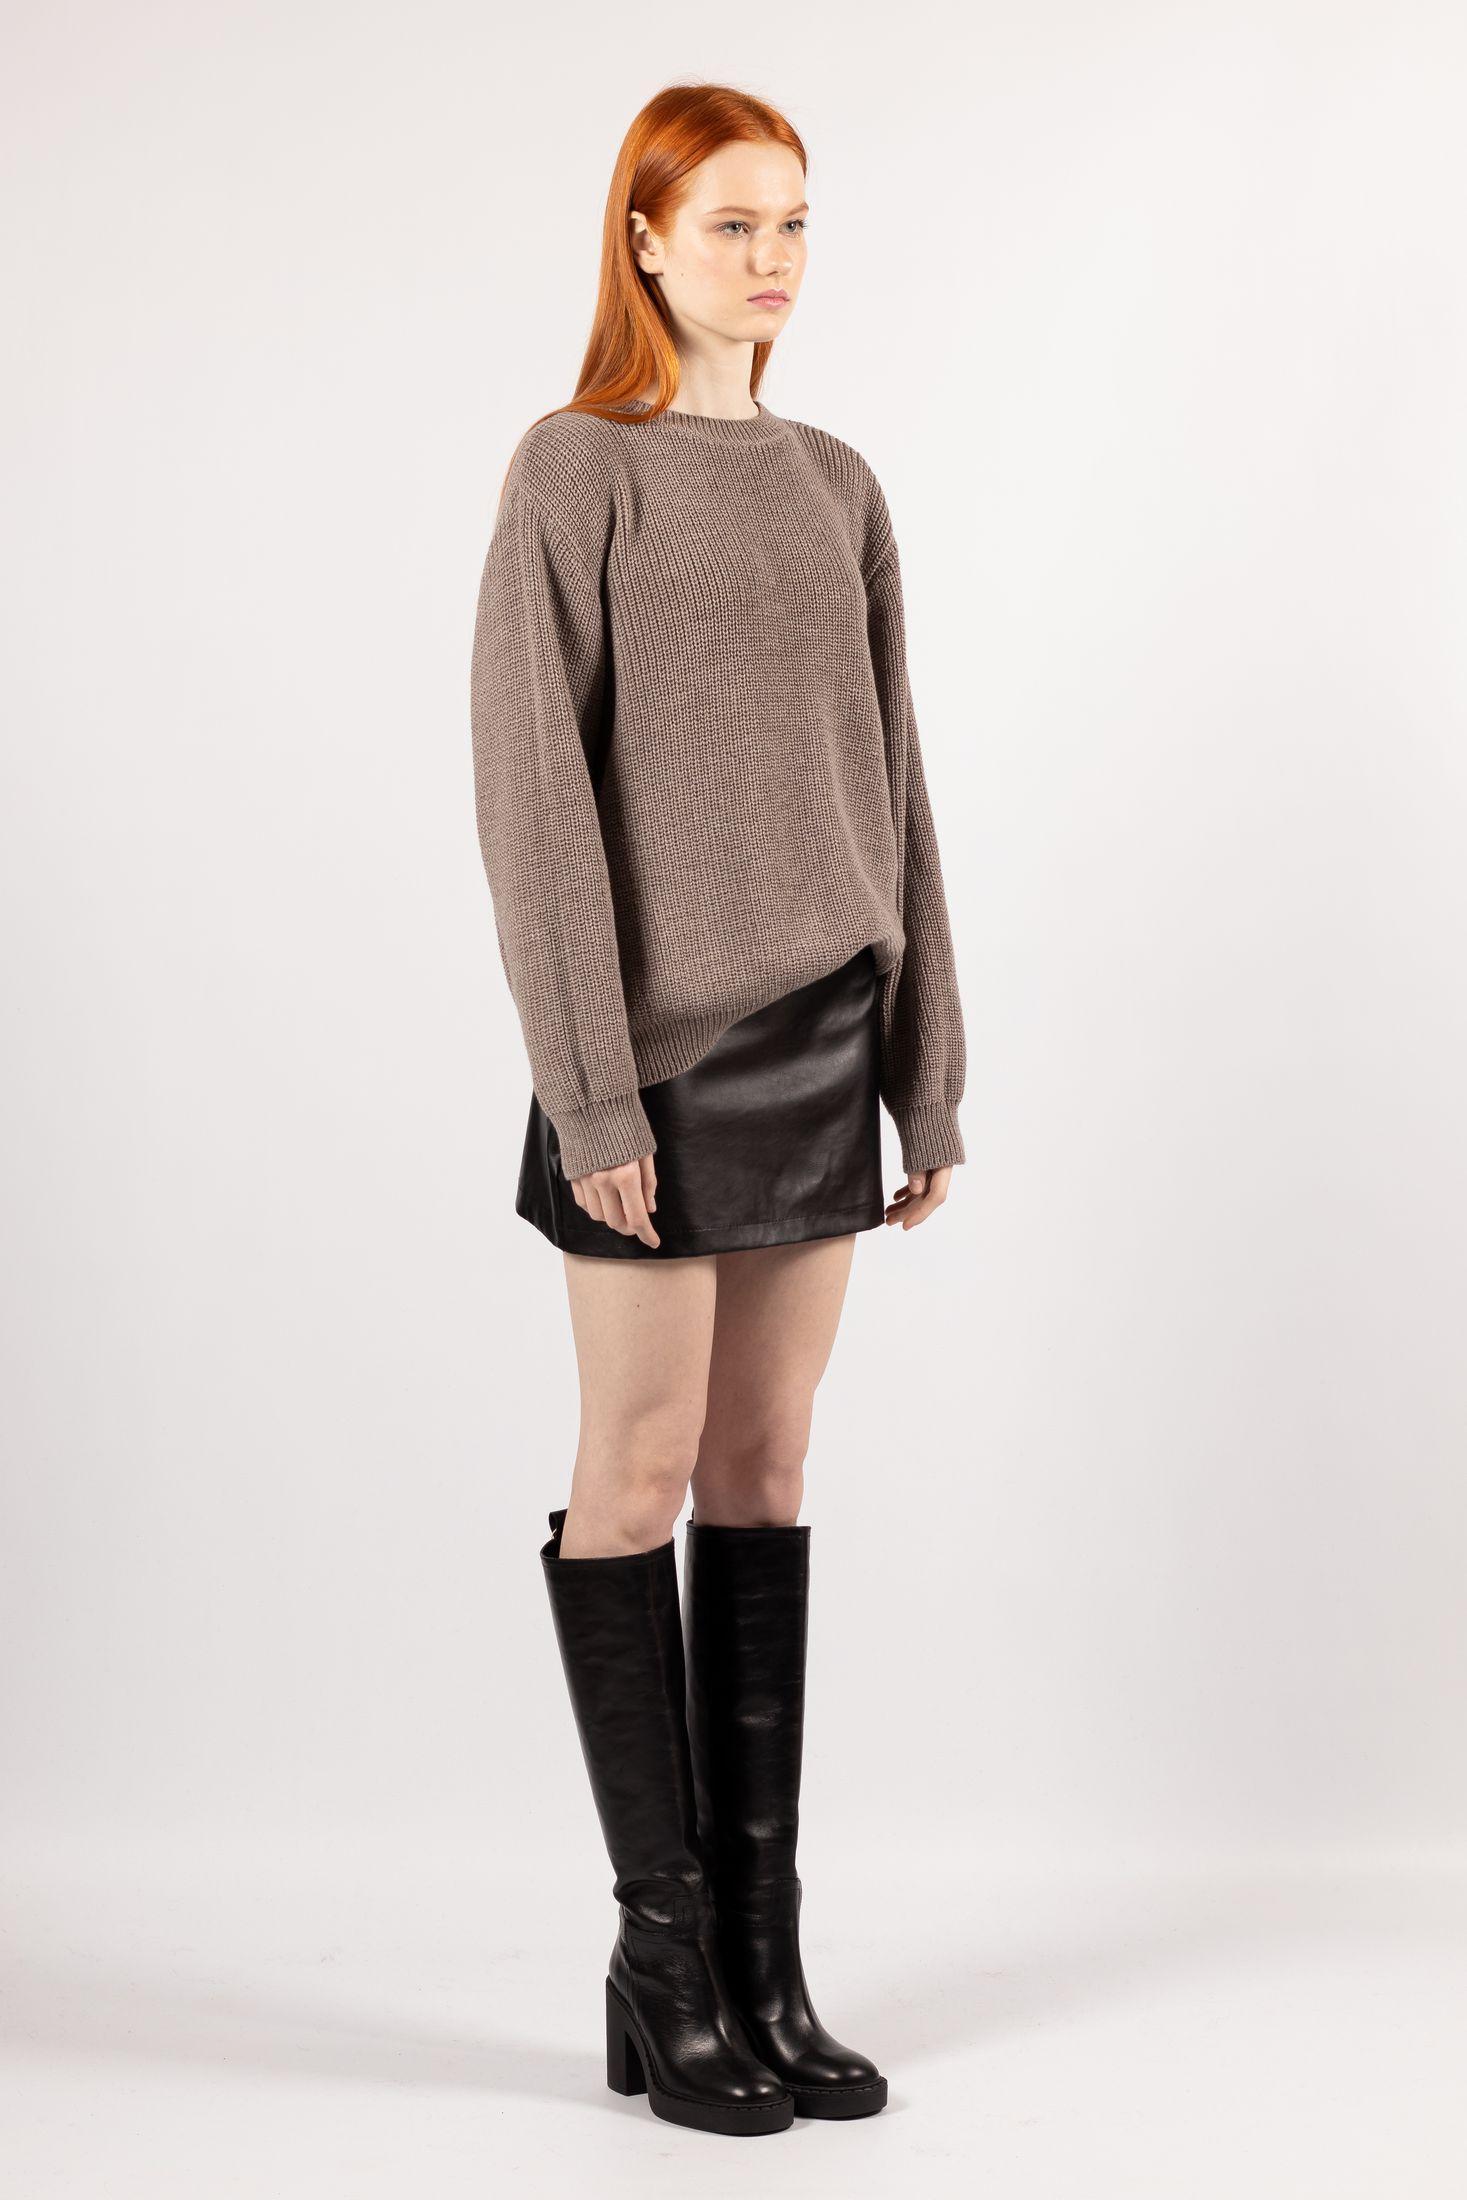 Brown merino wool sweater jumper, detachable collar.